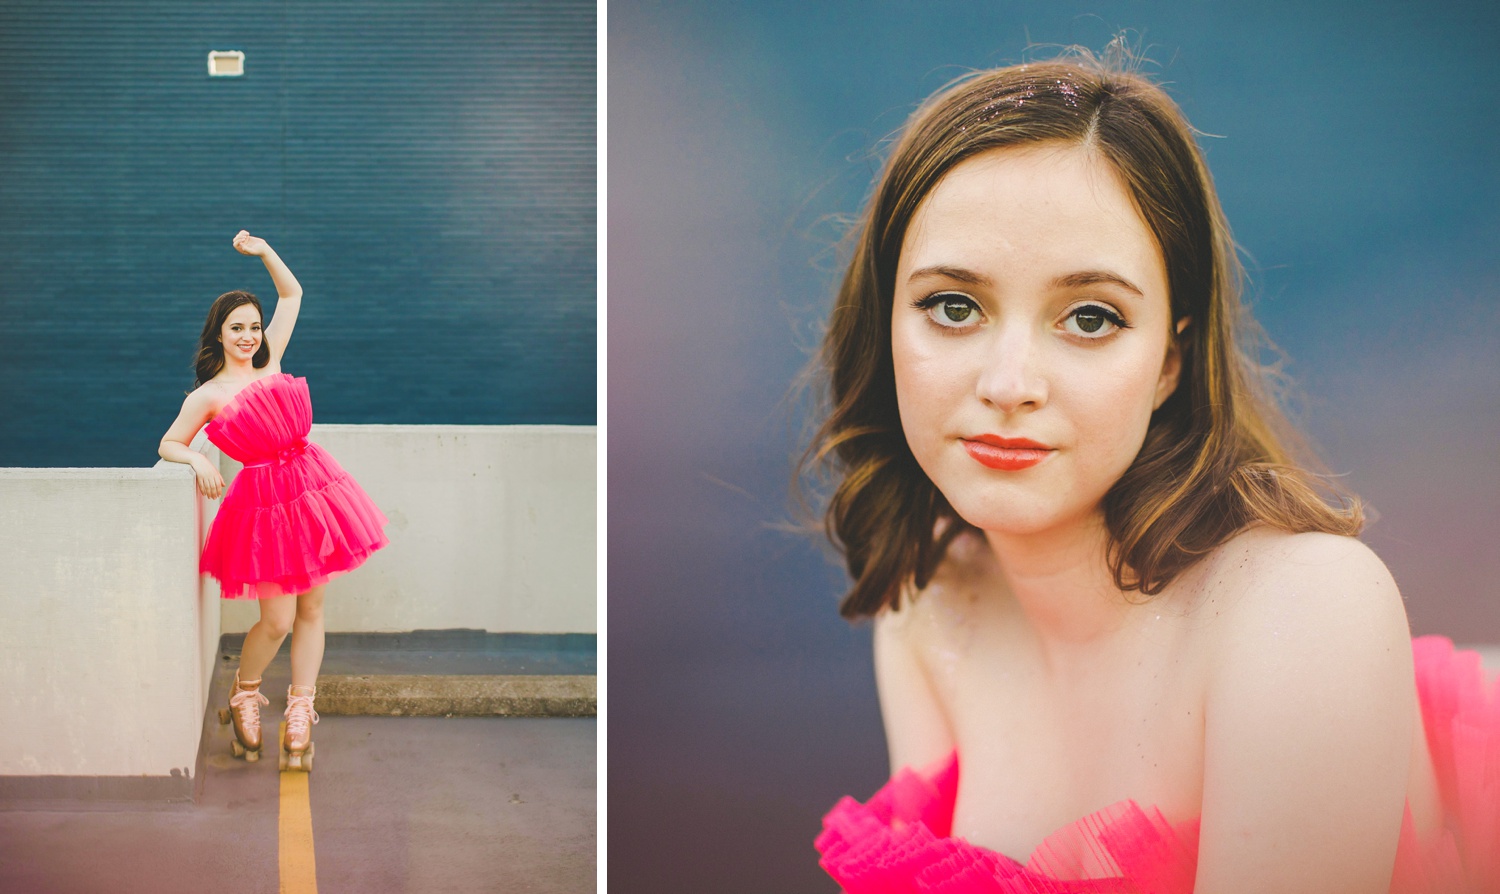 high school senior photographs with hot pink dress